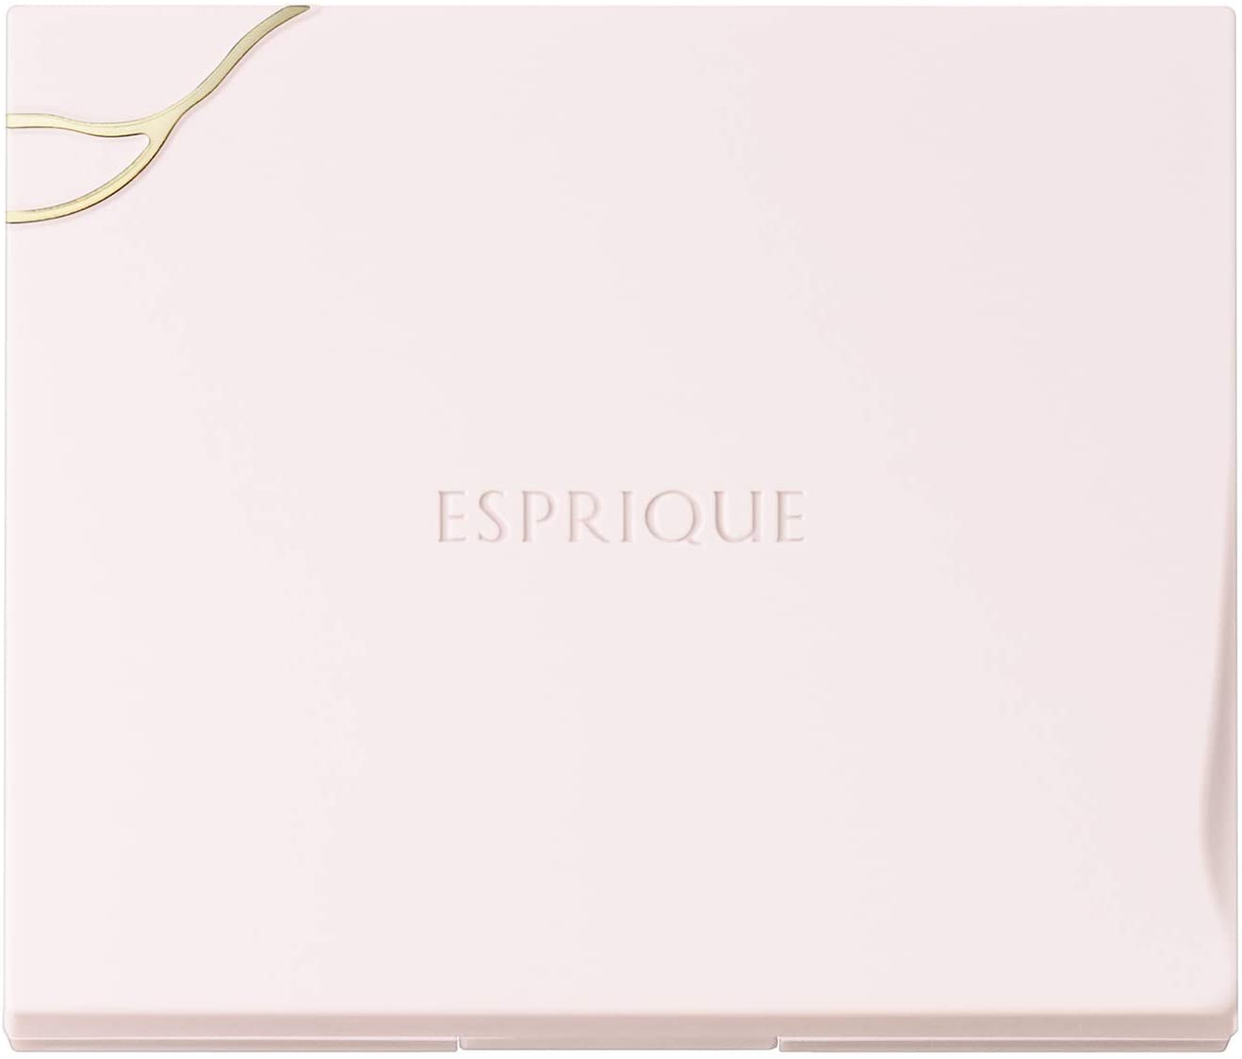 ESPRIQUE(エスプリーク) メロウ フィーリング アイズの商品画像9 